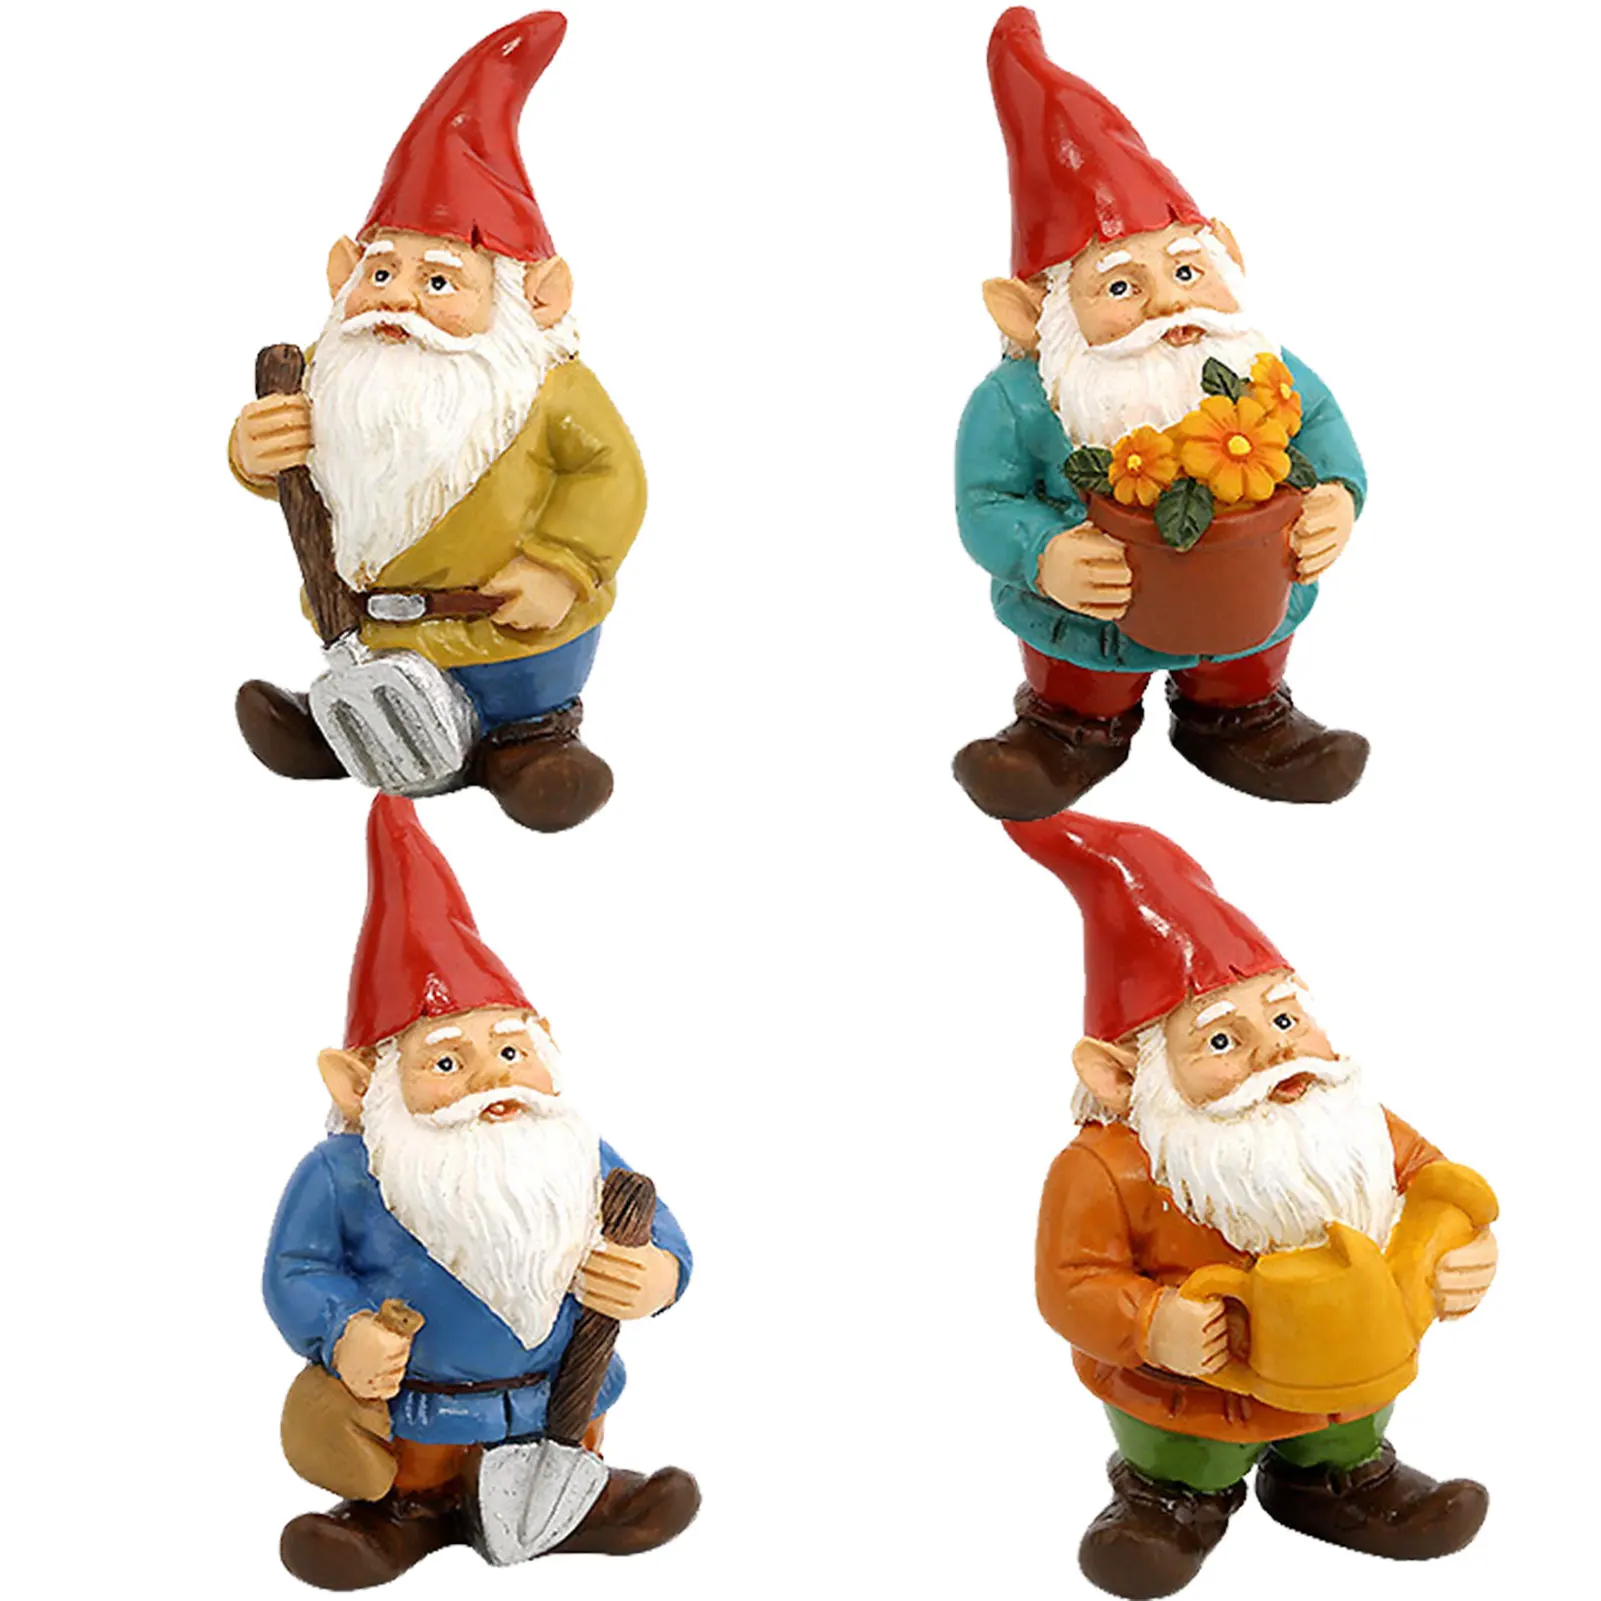 

4 Pcs Miniature Garden Gnome Figurines Mini Gnomes Dwarfs Durable Resin Statues for Garden Yard Lawn Pathway Decor